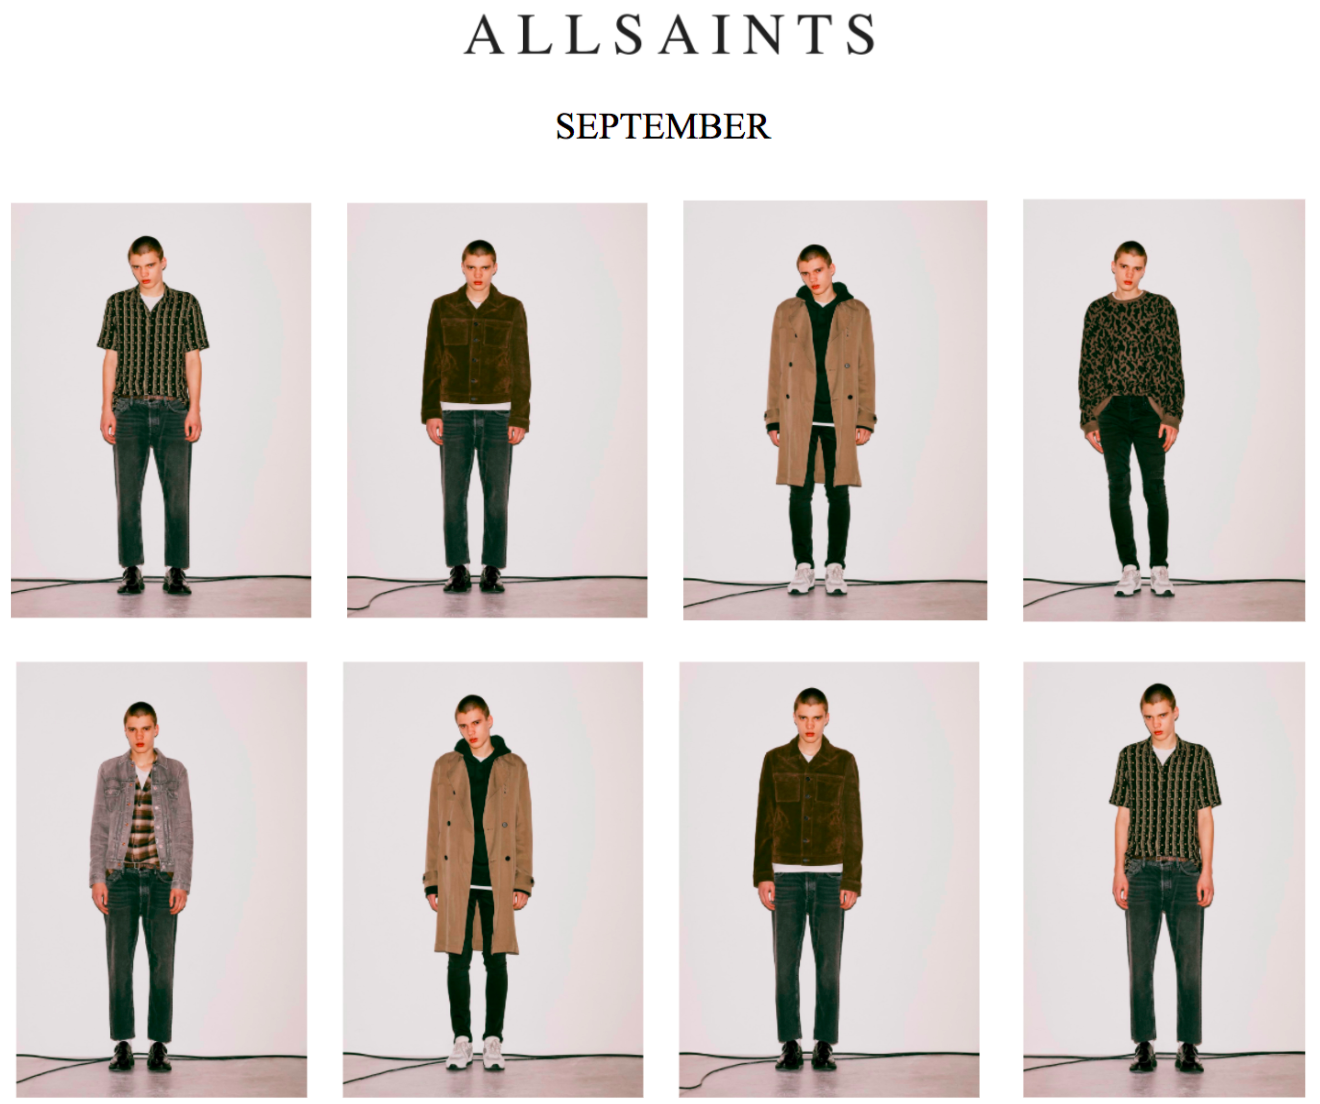 All Saints Release September/October Lookbook